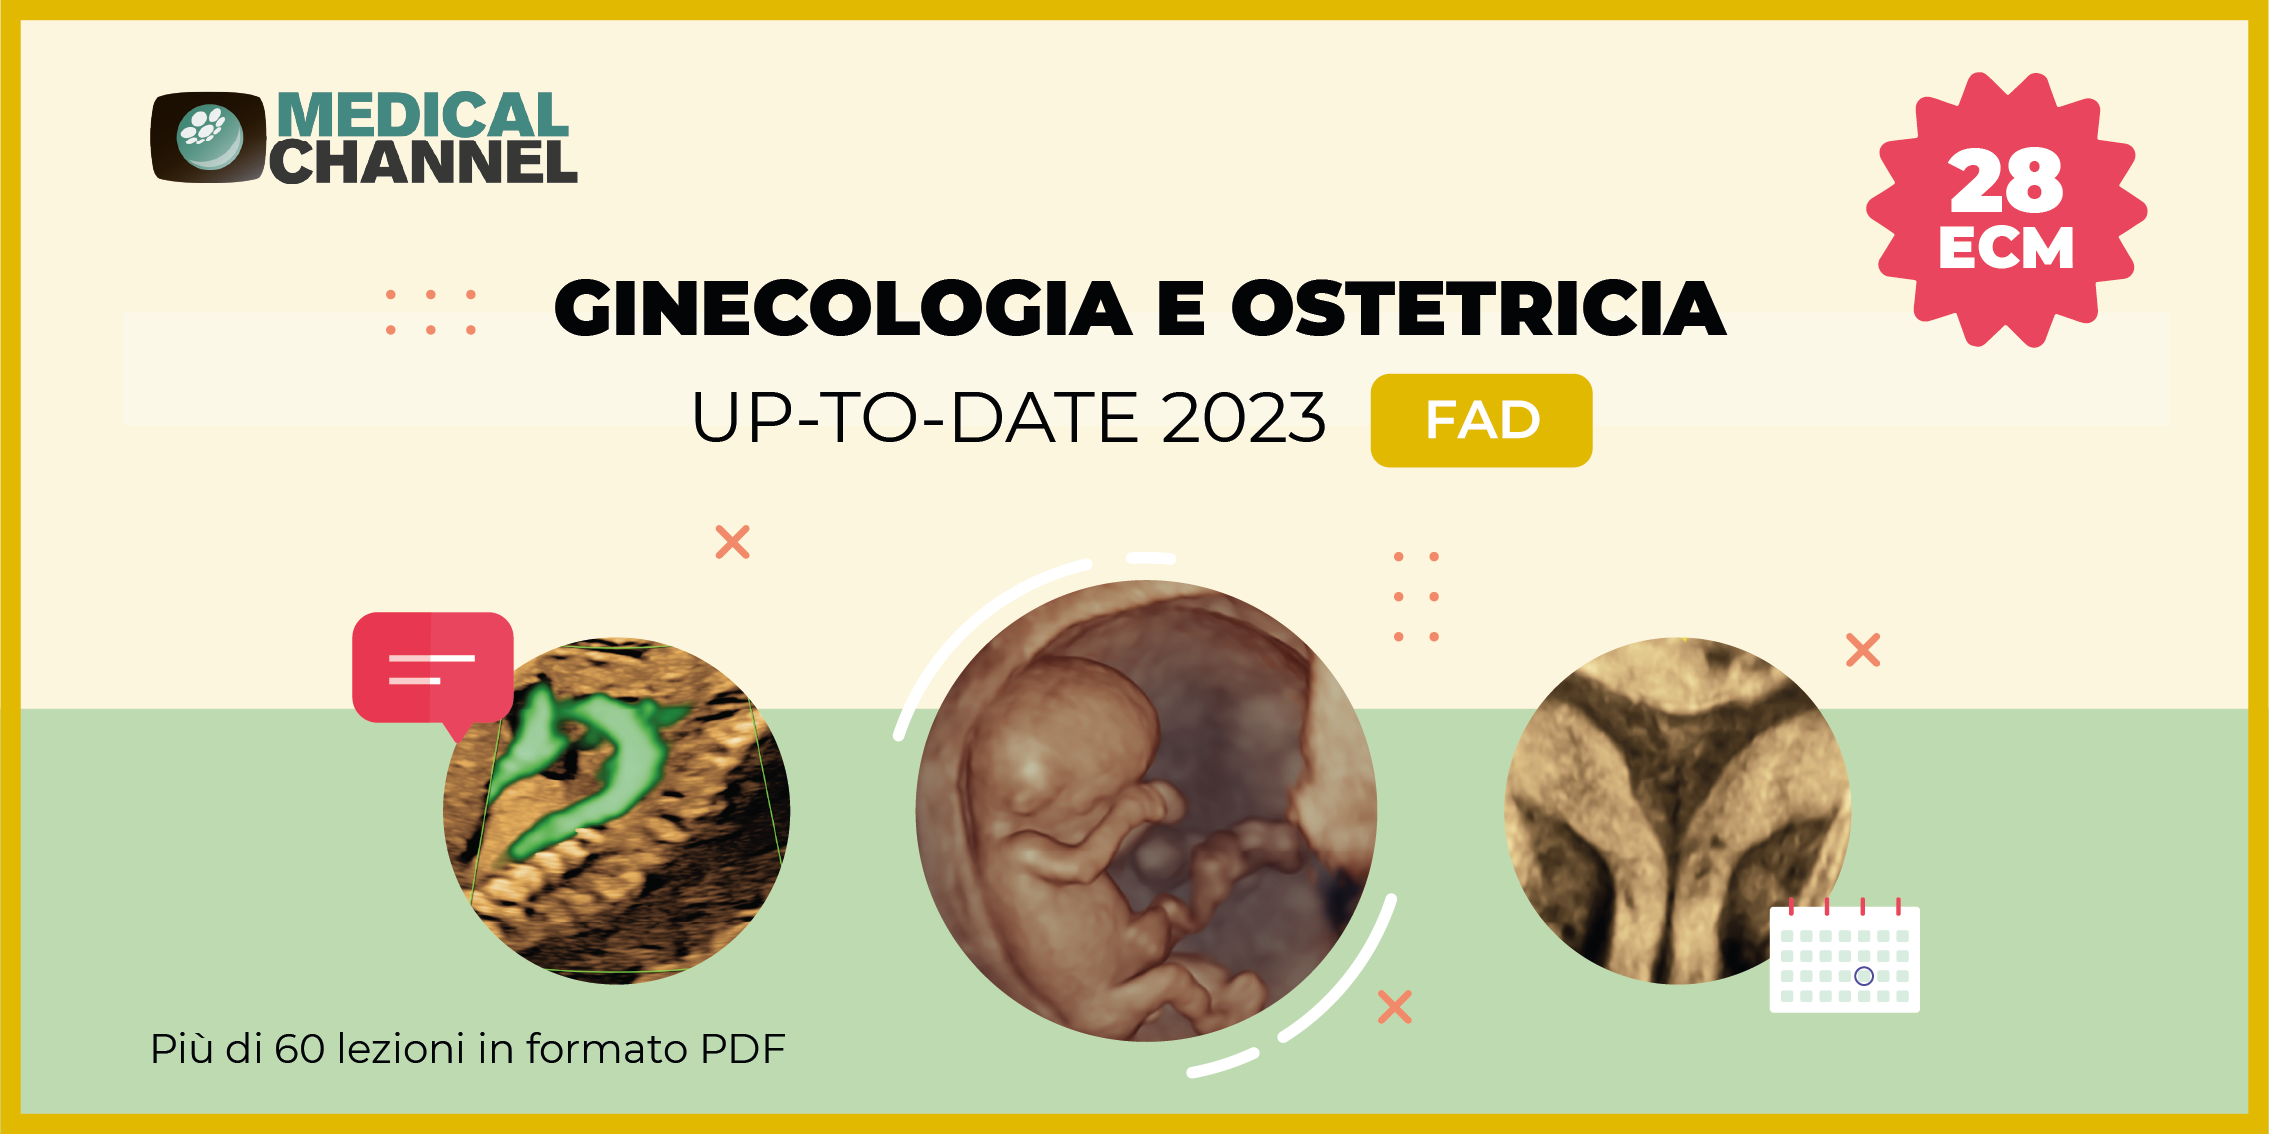 GINECOLOGIA E OSTETRICIA: UP-TO-DATE 2023